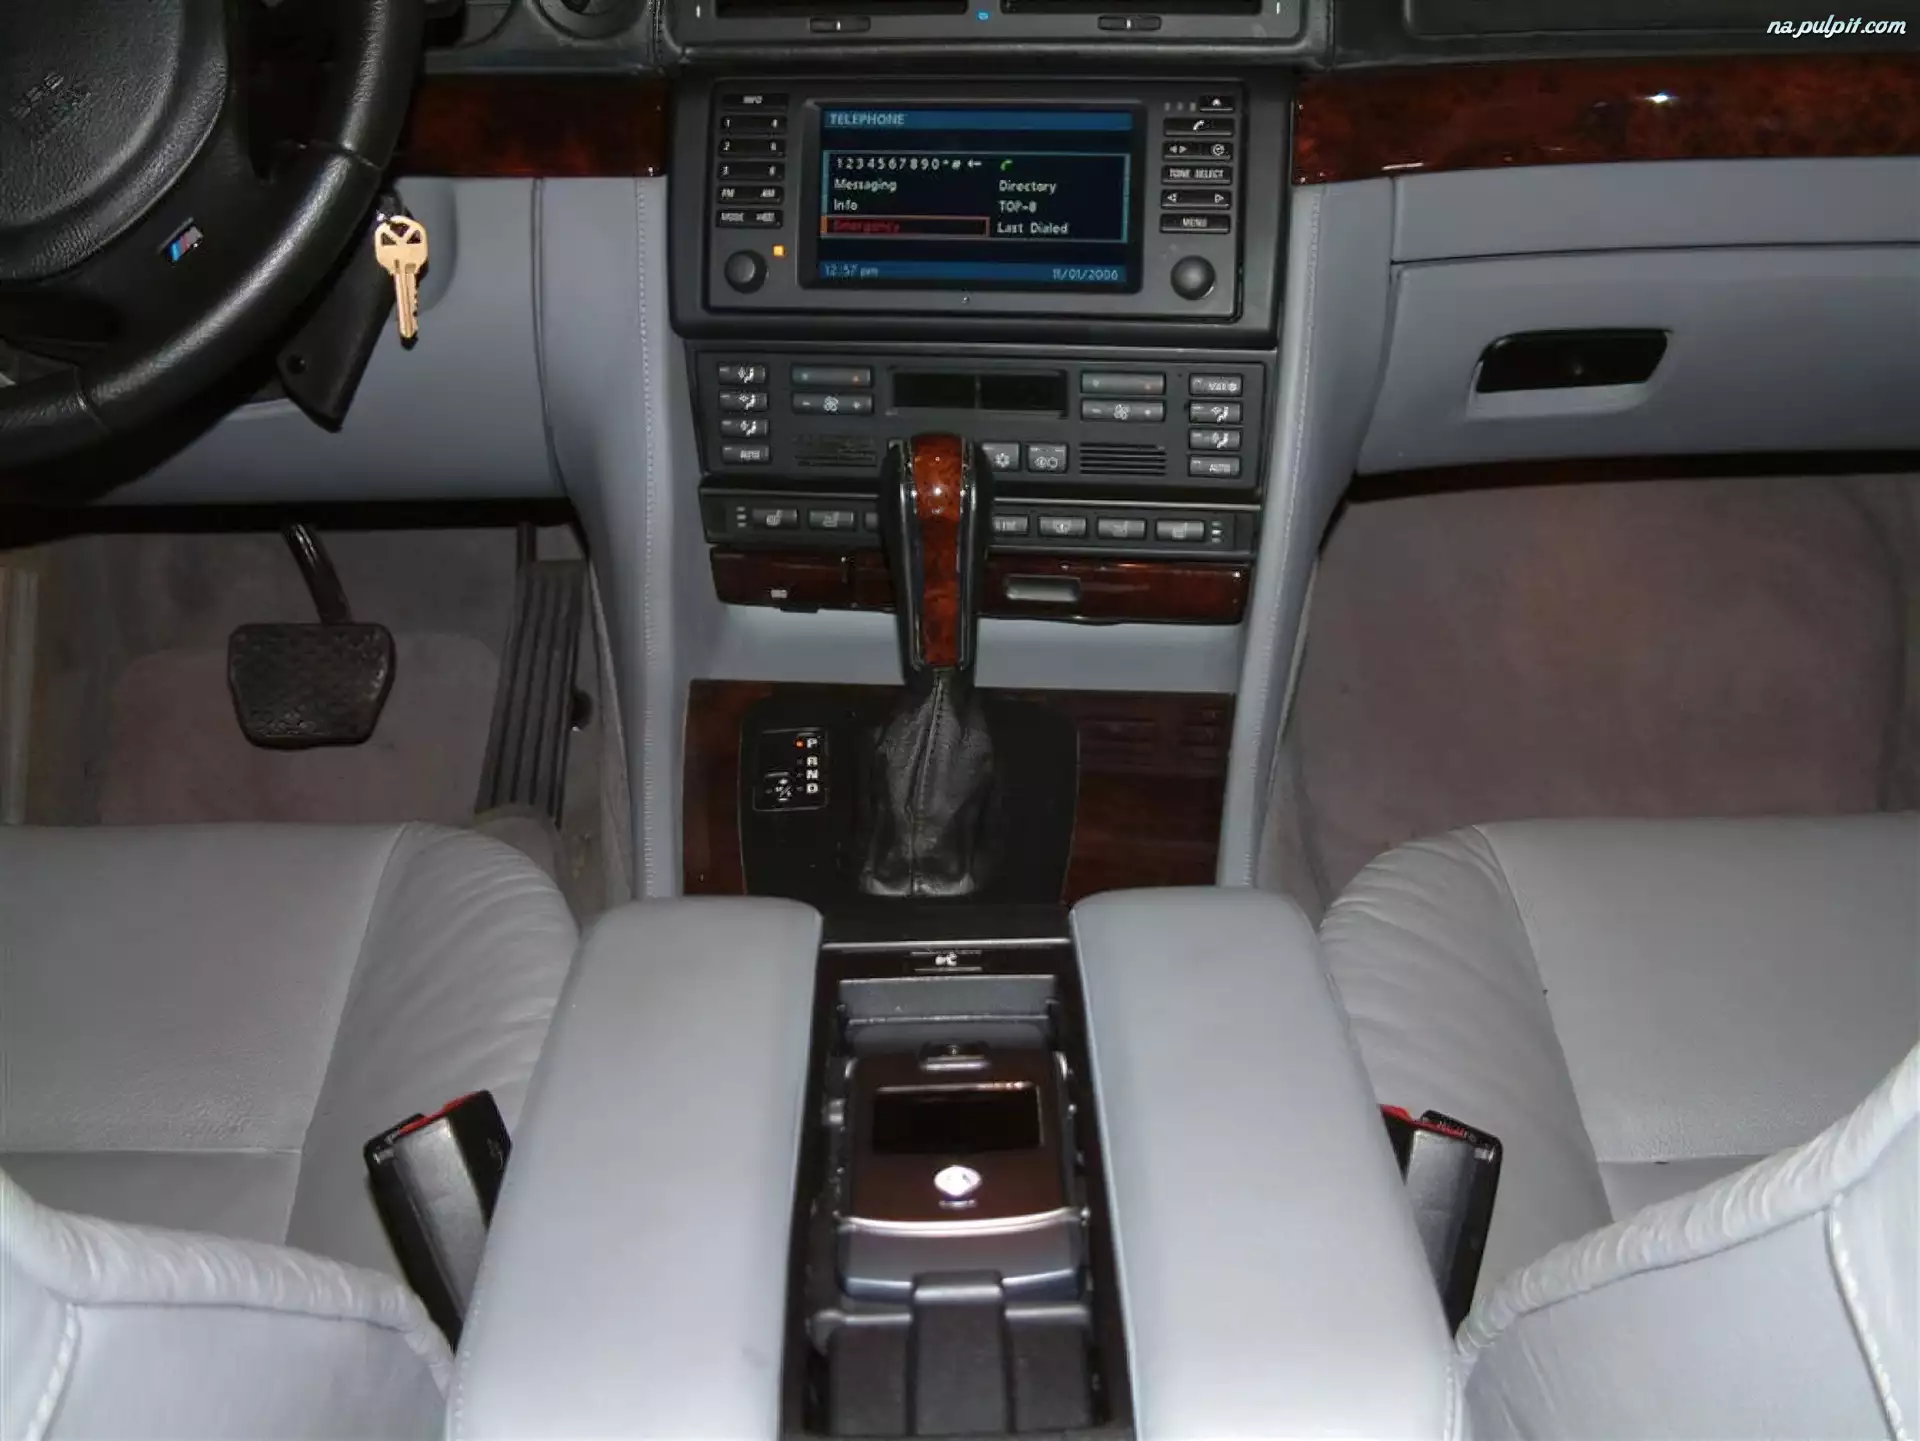 Dźwignia, Radio, E65, BMW 7, Panel